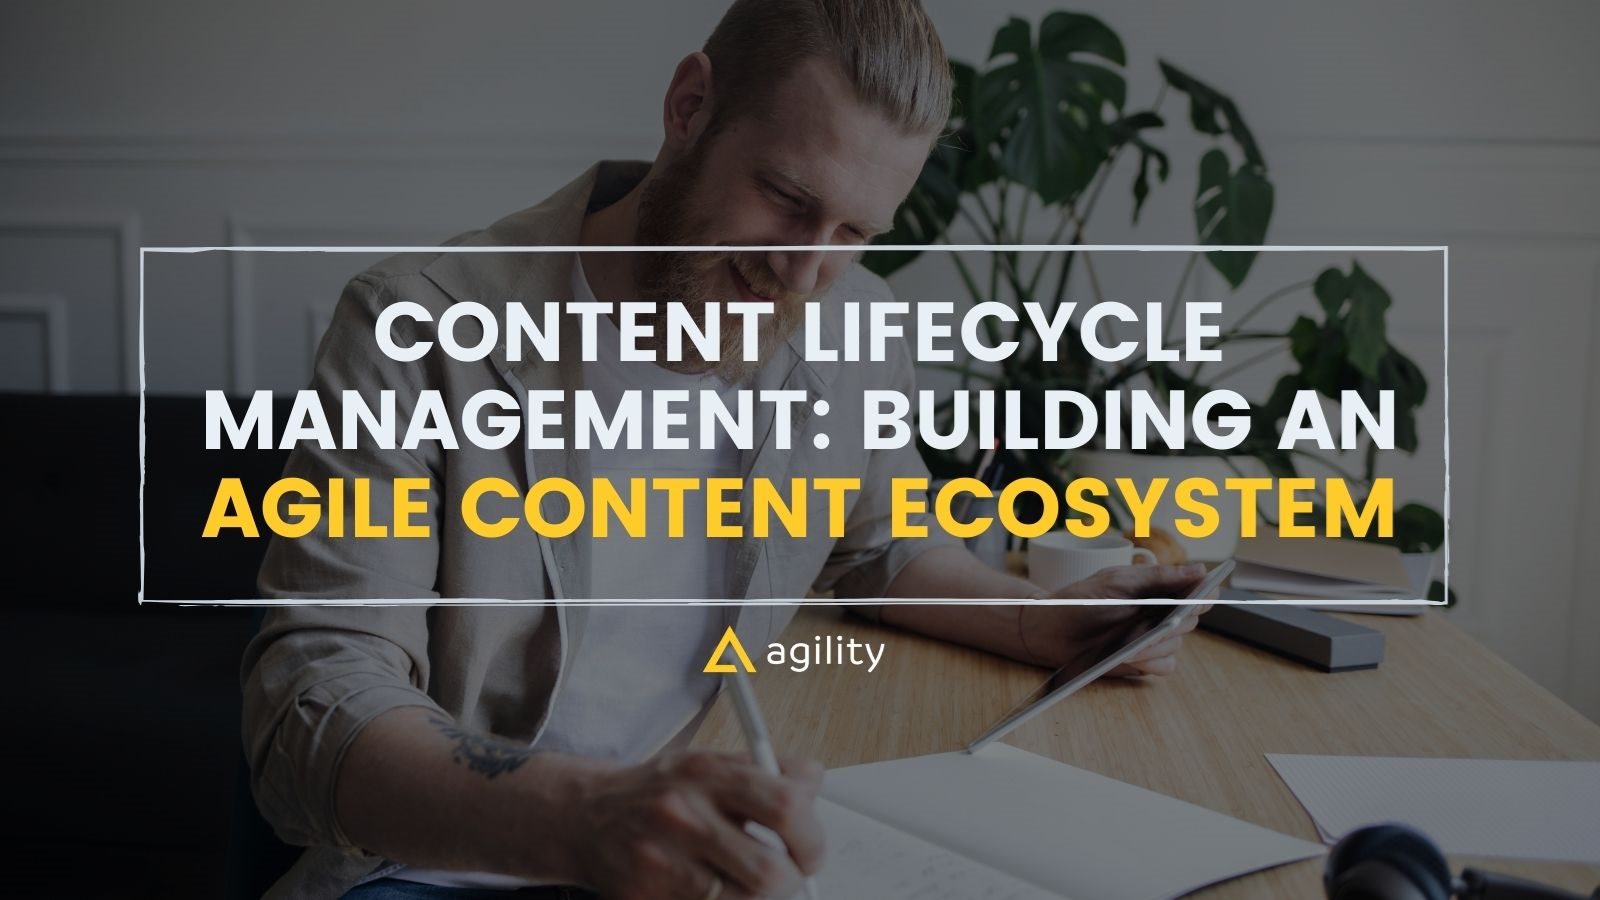 Building an Agile Content Ecosystem